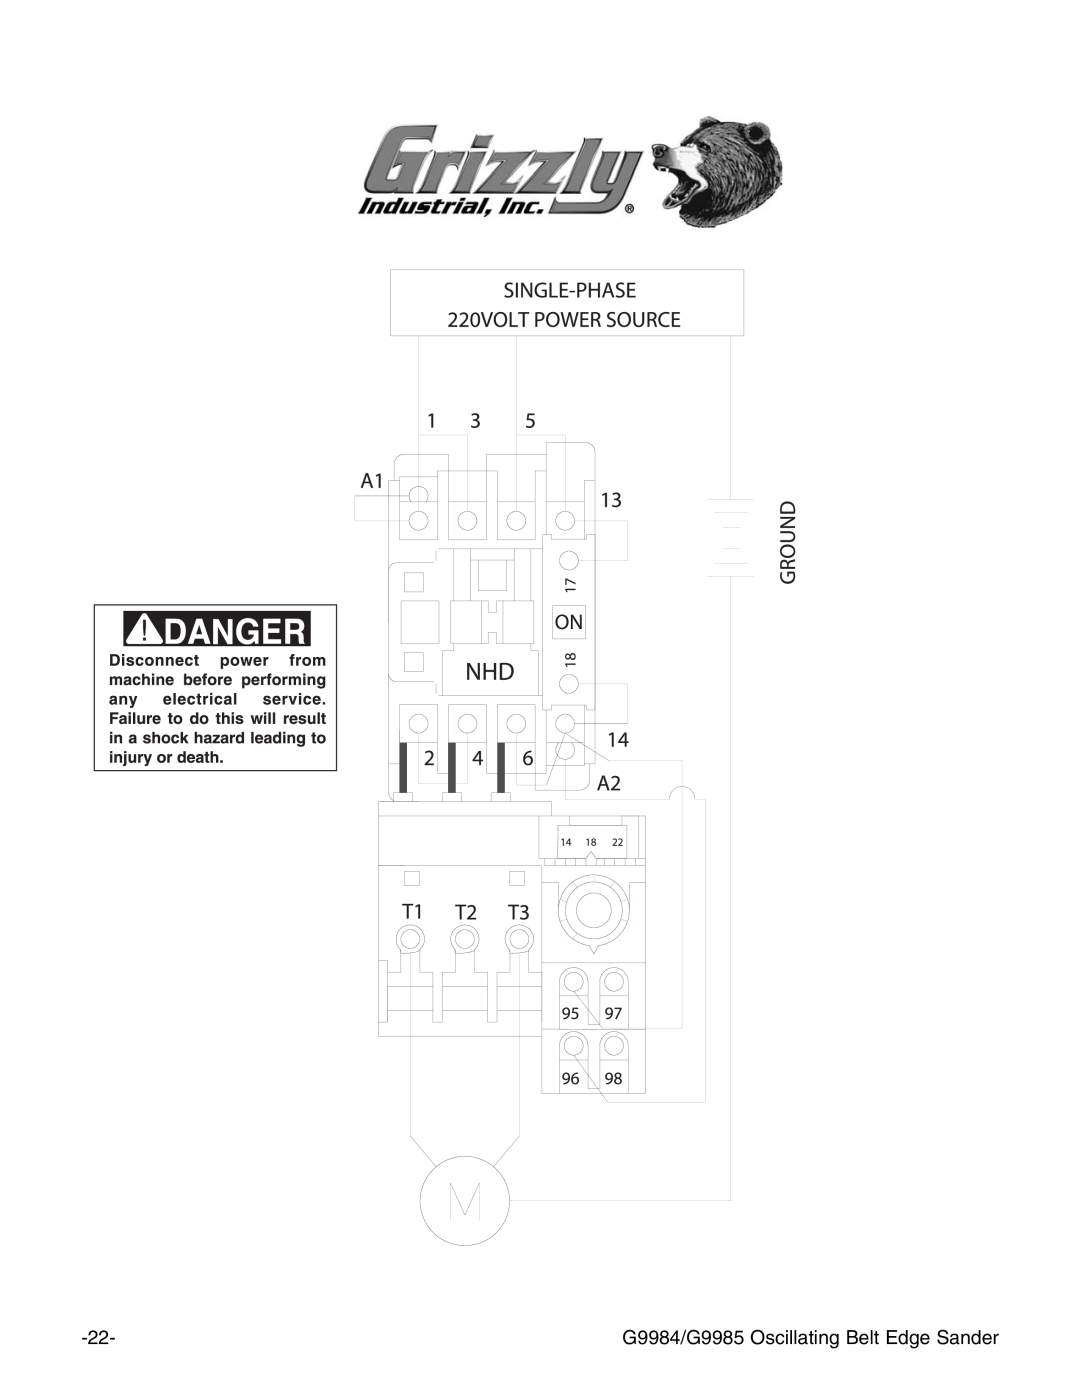 Grizzly instruction manual G9984/G9985 Oscillating Belt Edge Sander 